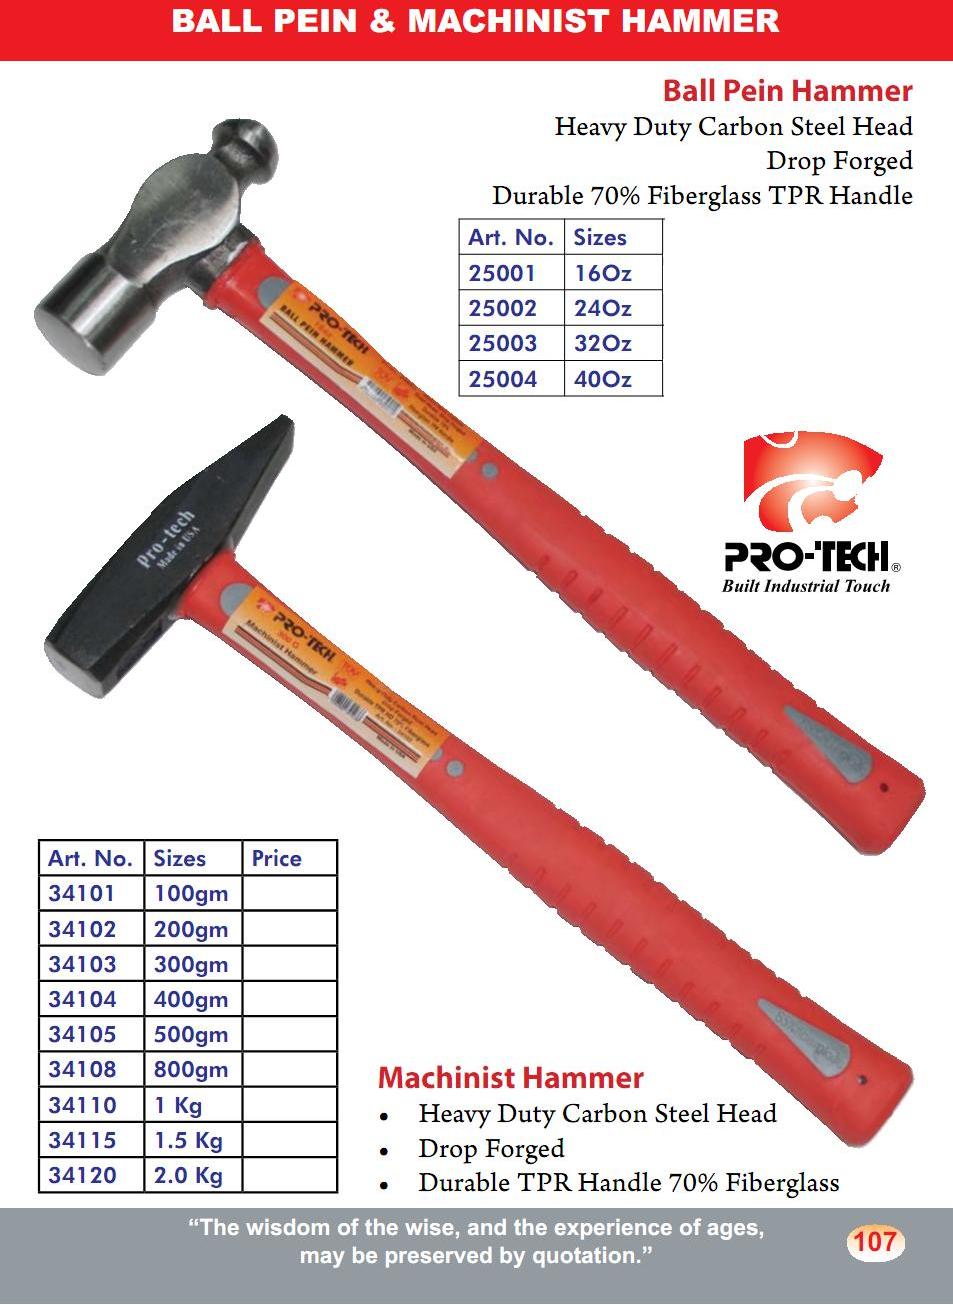 Ball Pein Hammer & Machinist Hammer Fiber Handle